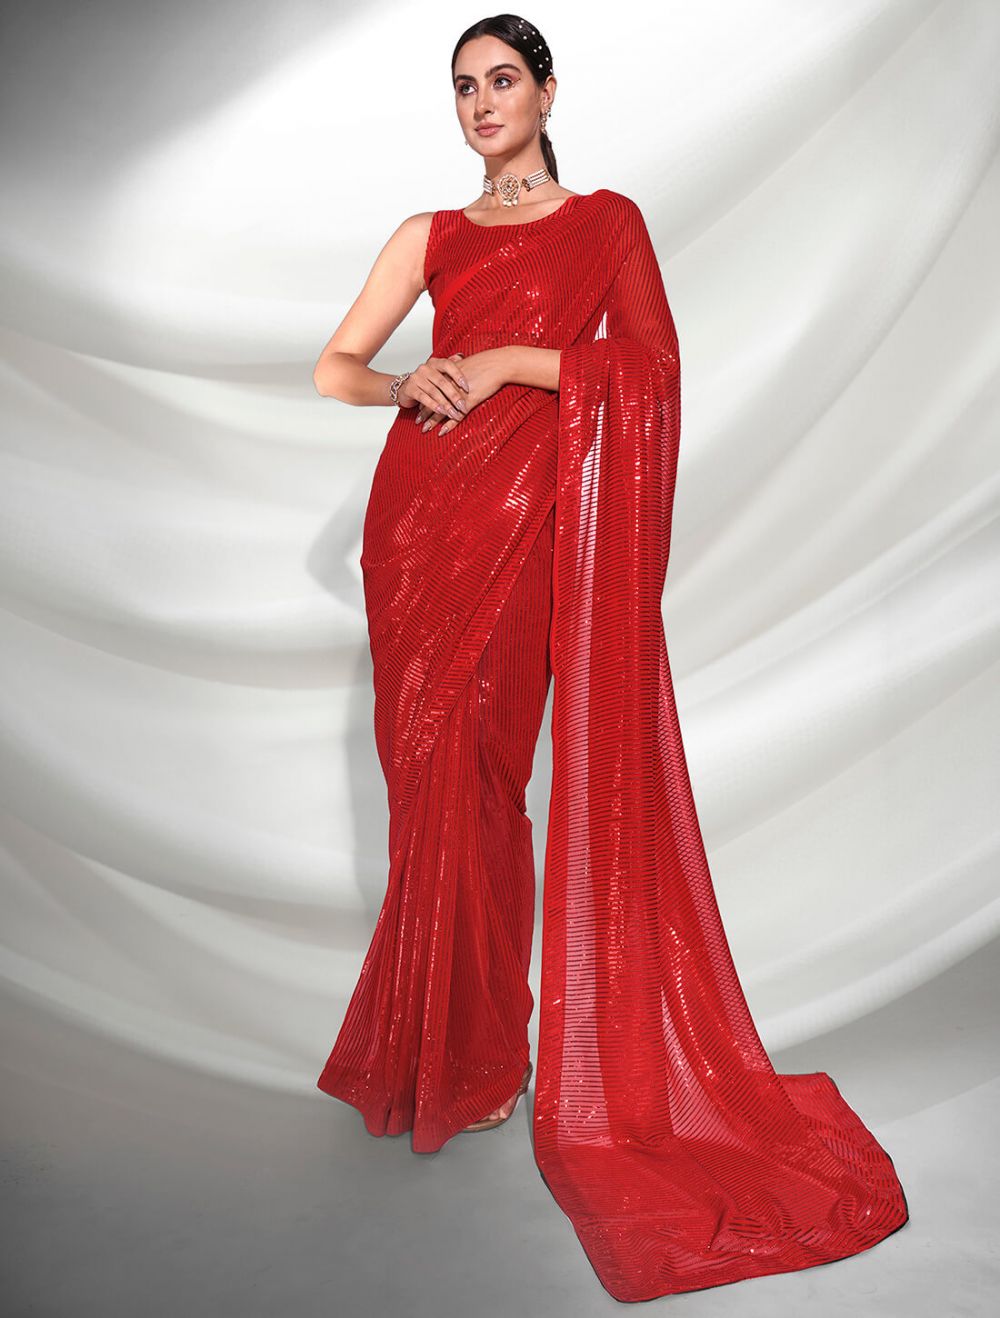 SAREES YOU CAN'T MISS! | VAMA DESIGNS Indian Bridal Cou